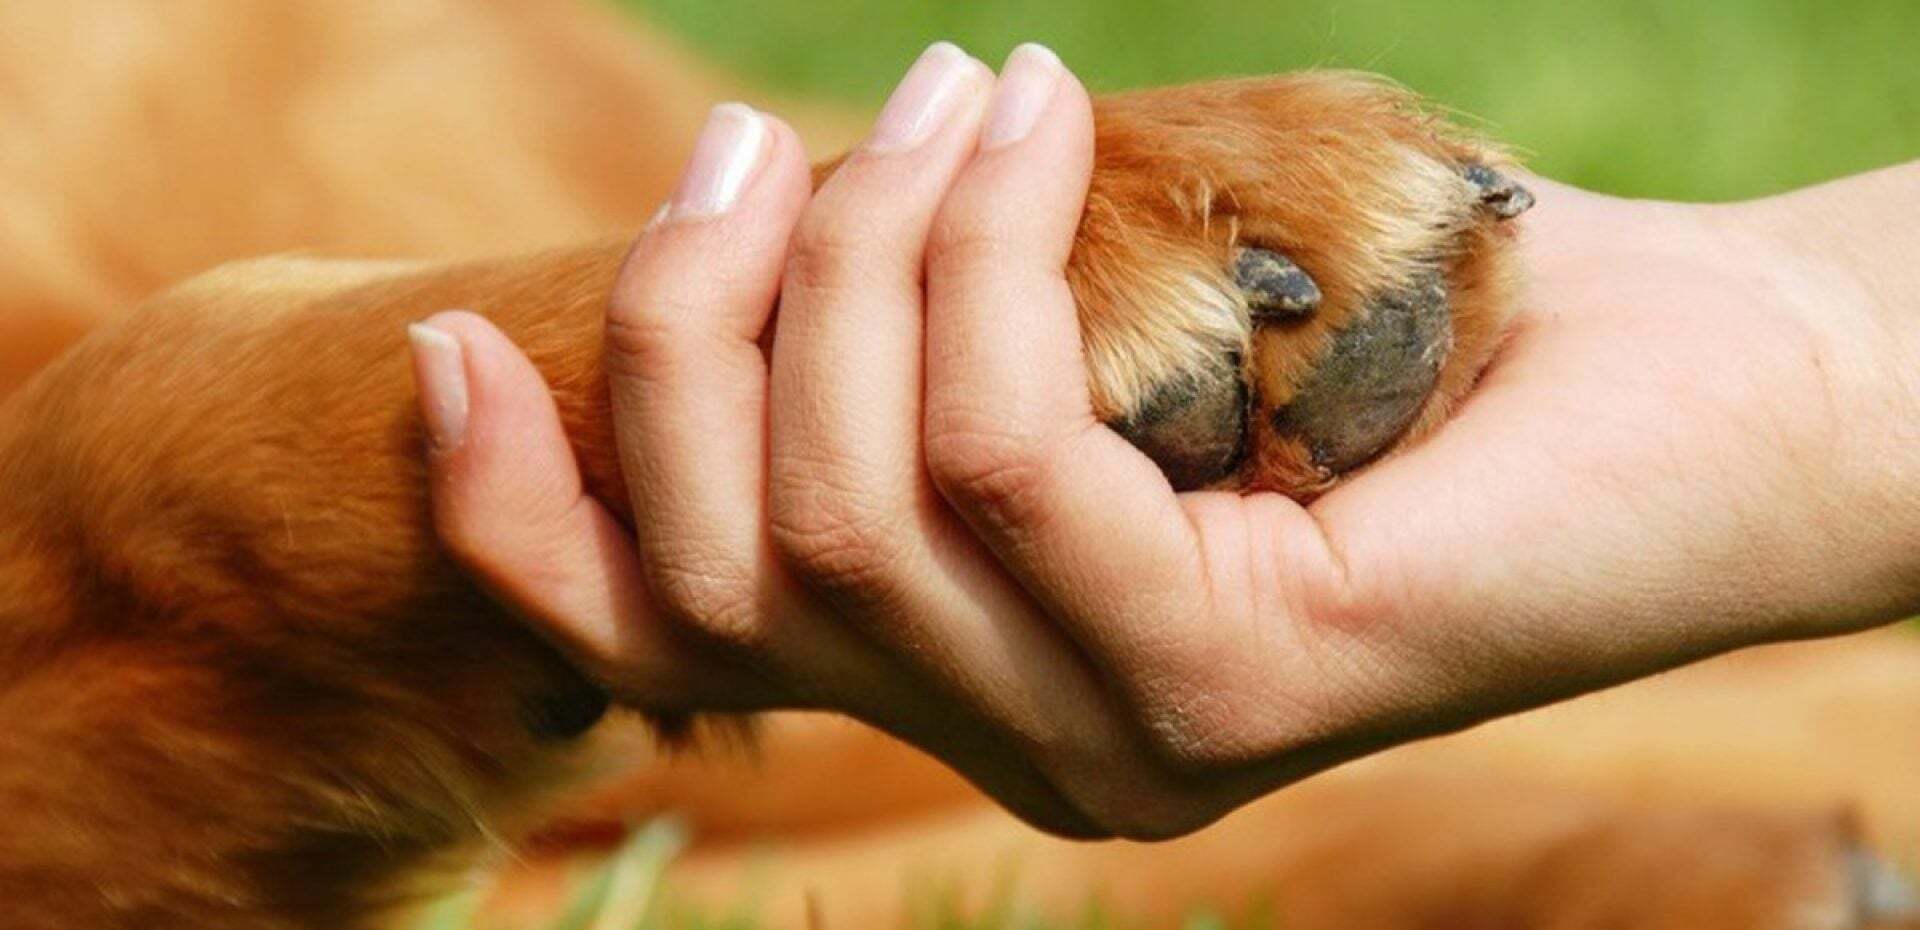 خطر انتقال عفونت از سگ به انسان